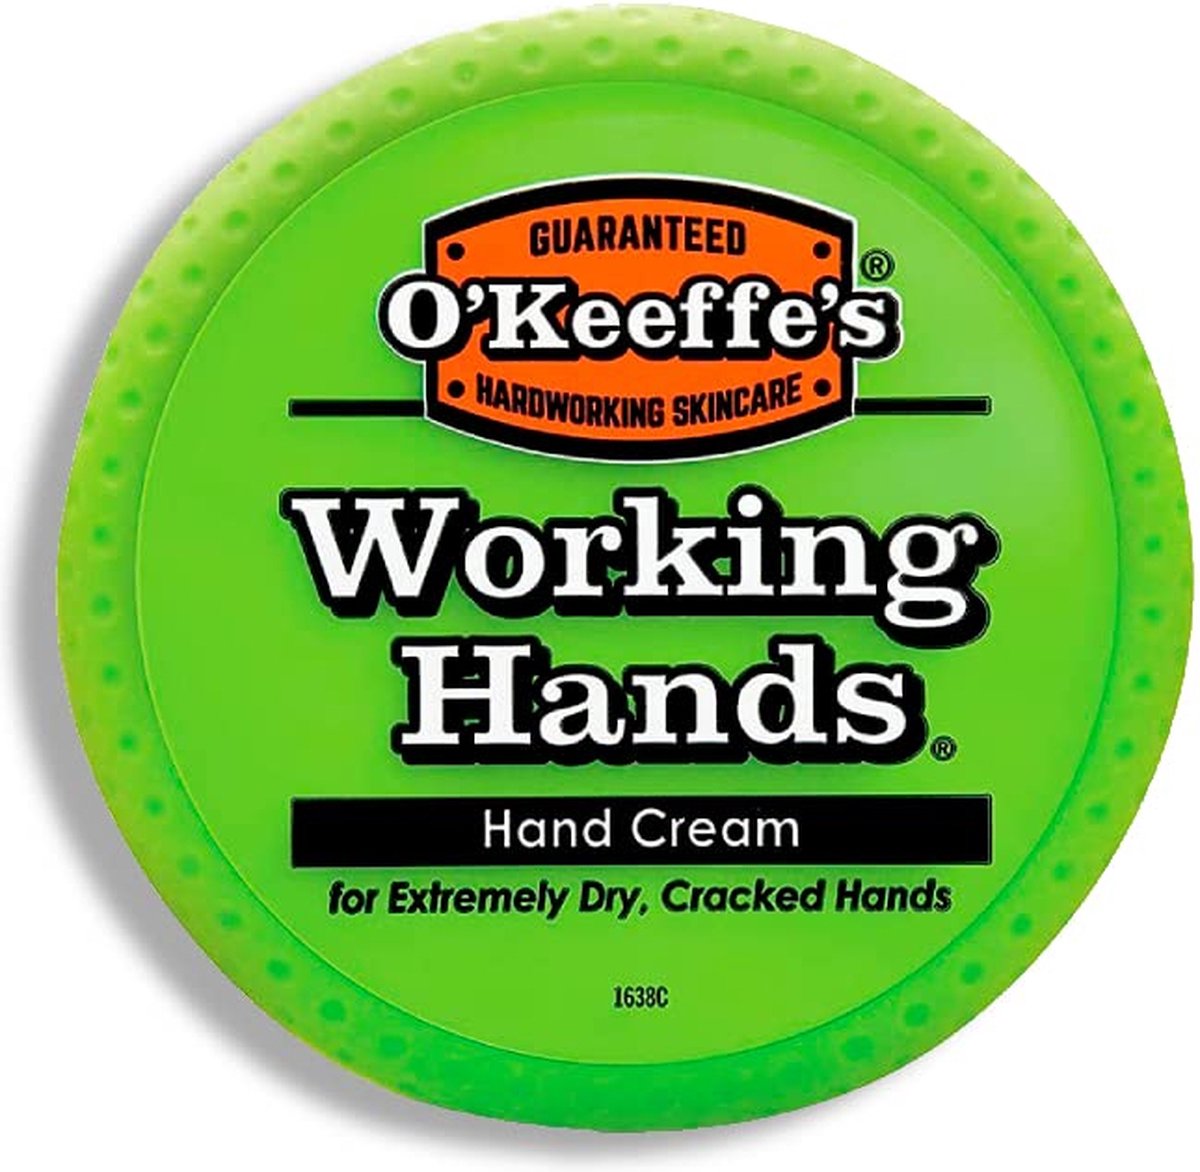 O'keeffe's Working Hands Hand Cream 96 G